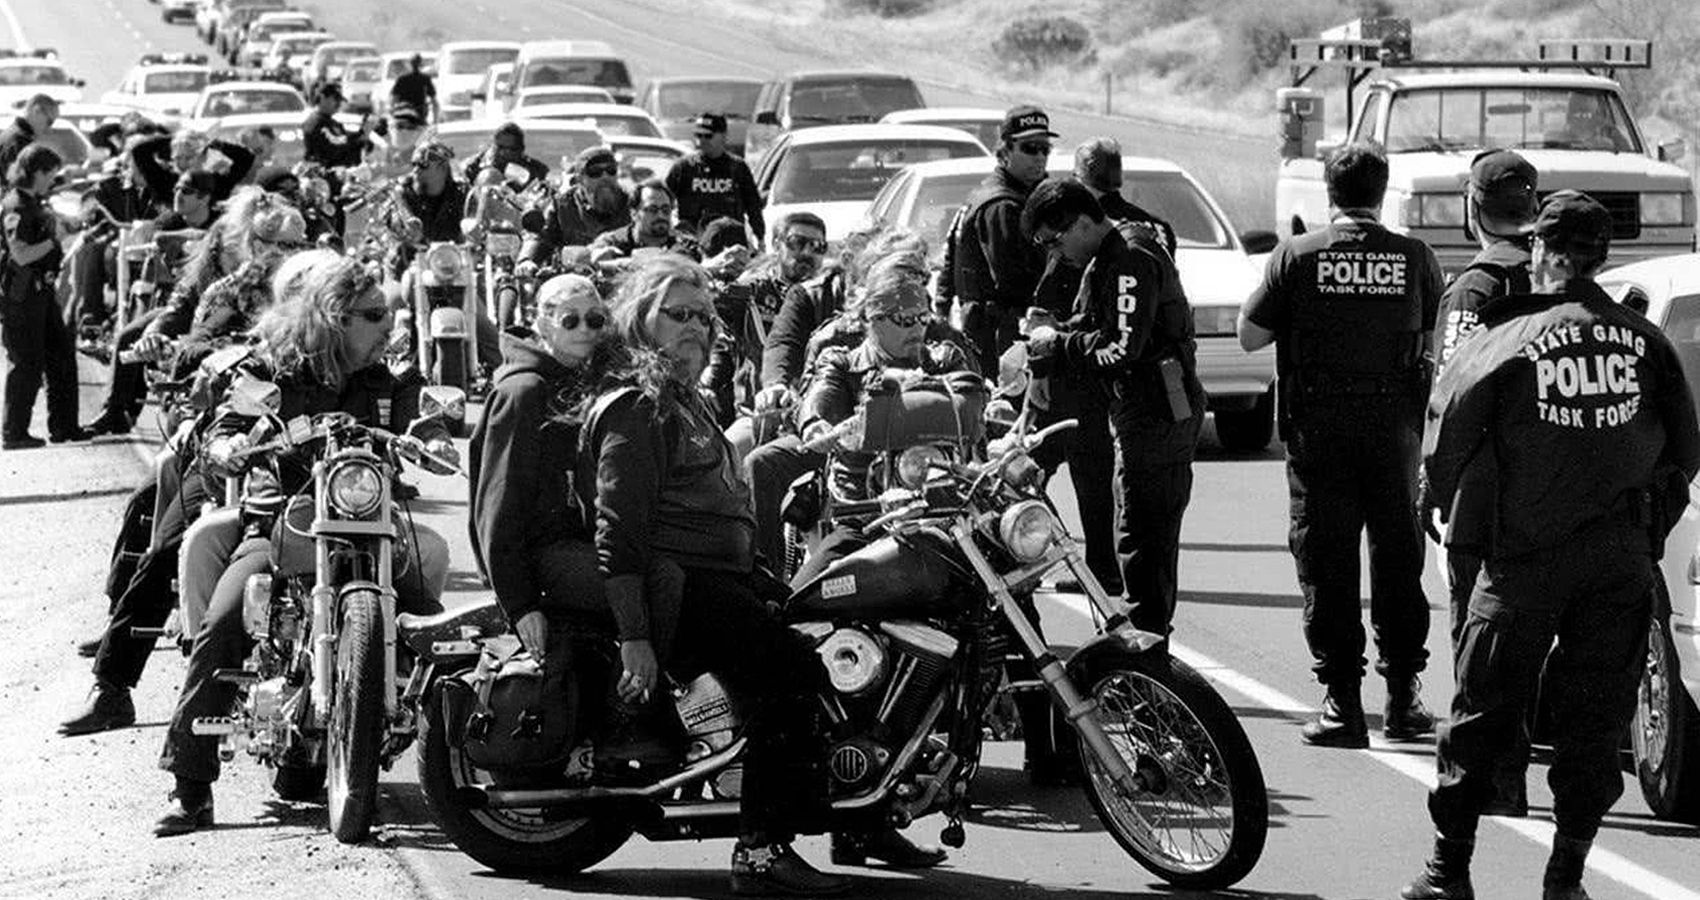 Hells Angels Motorcycle Club (HAMC) - A Worldwide Outlaw Motorcycle Club